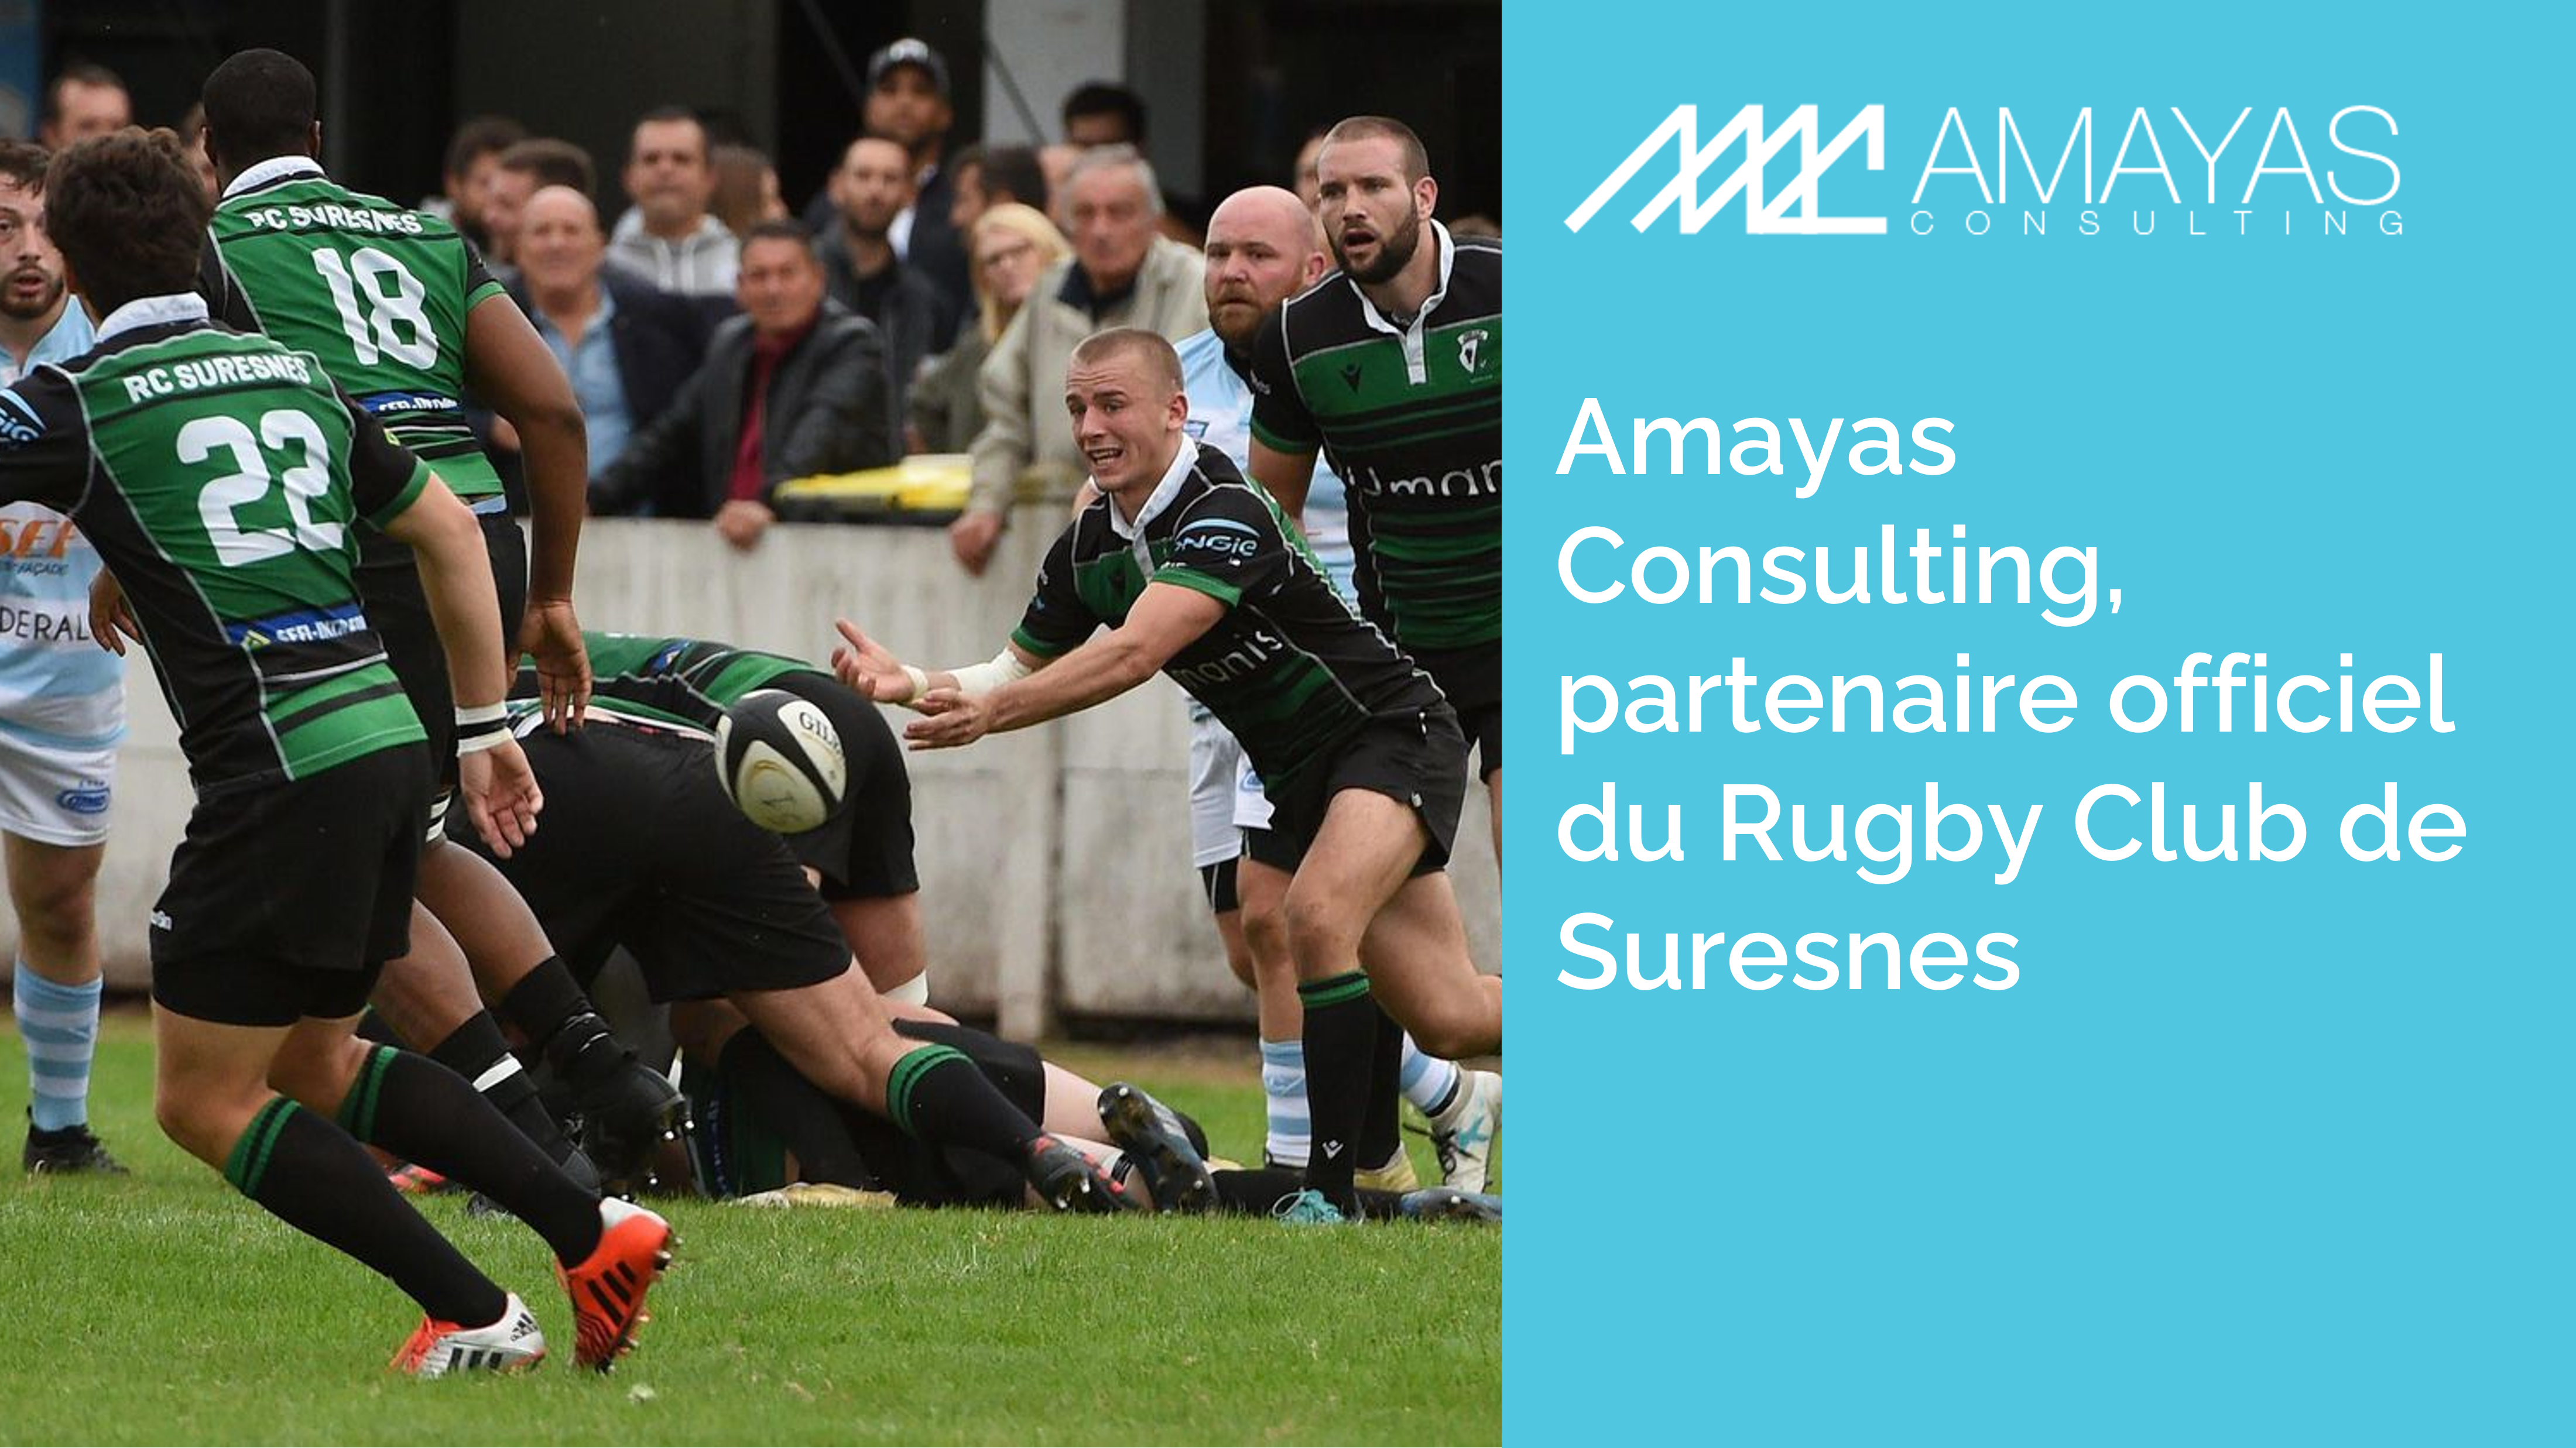 Amayas Consulting, partenaire officiel du Rugby Club de Suresnes